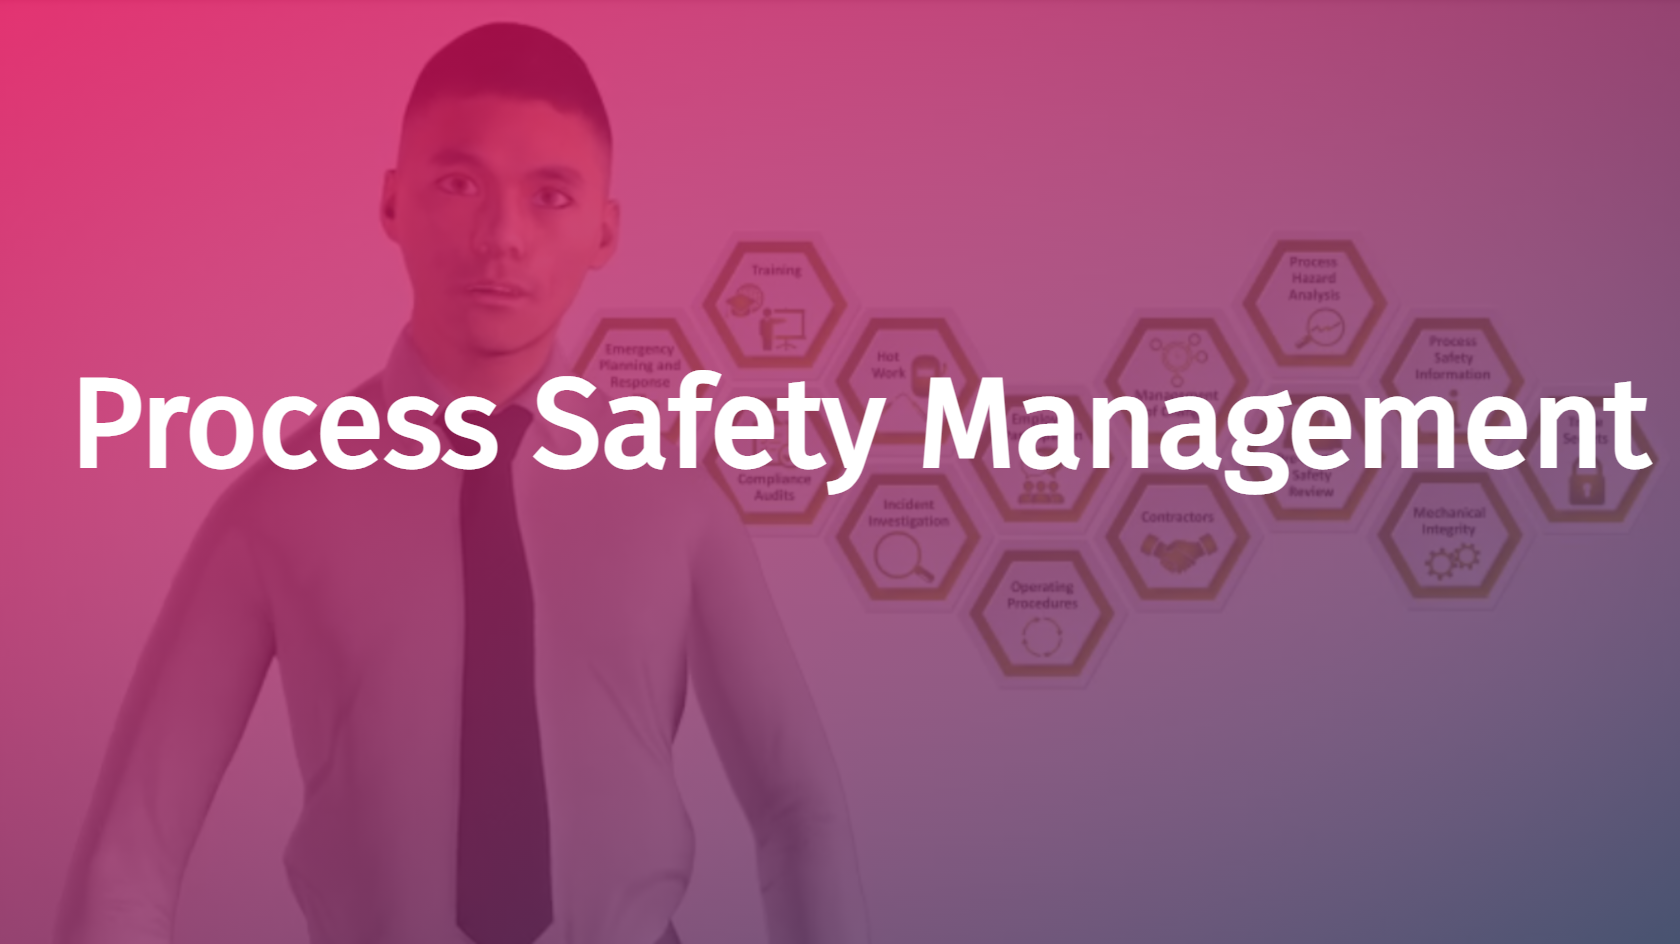 Spanish - Process Safety Management